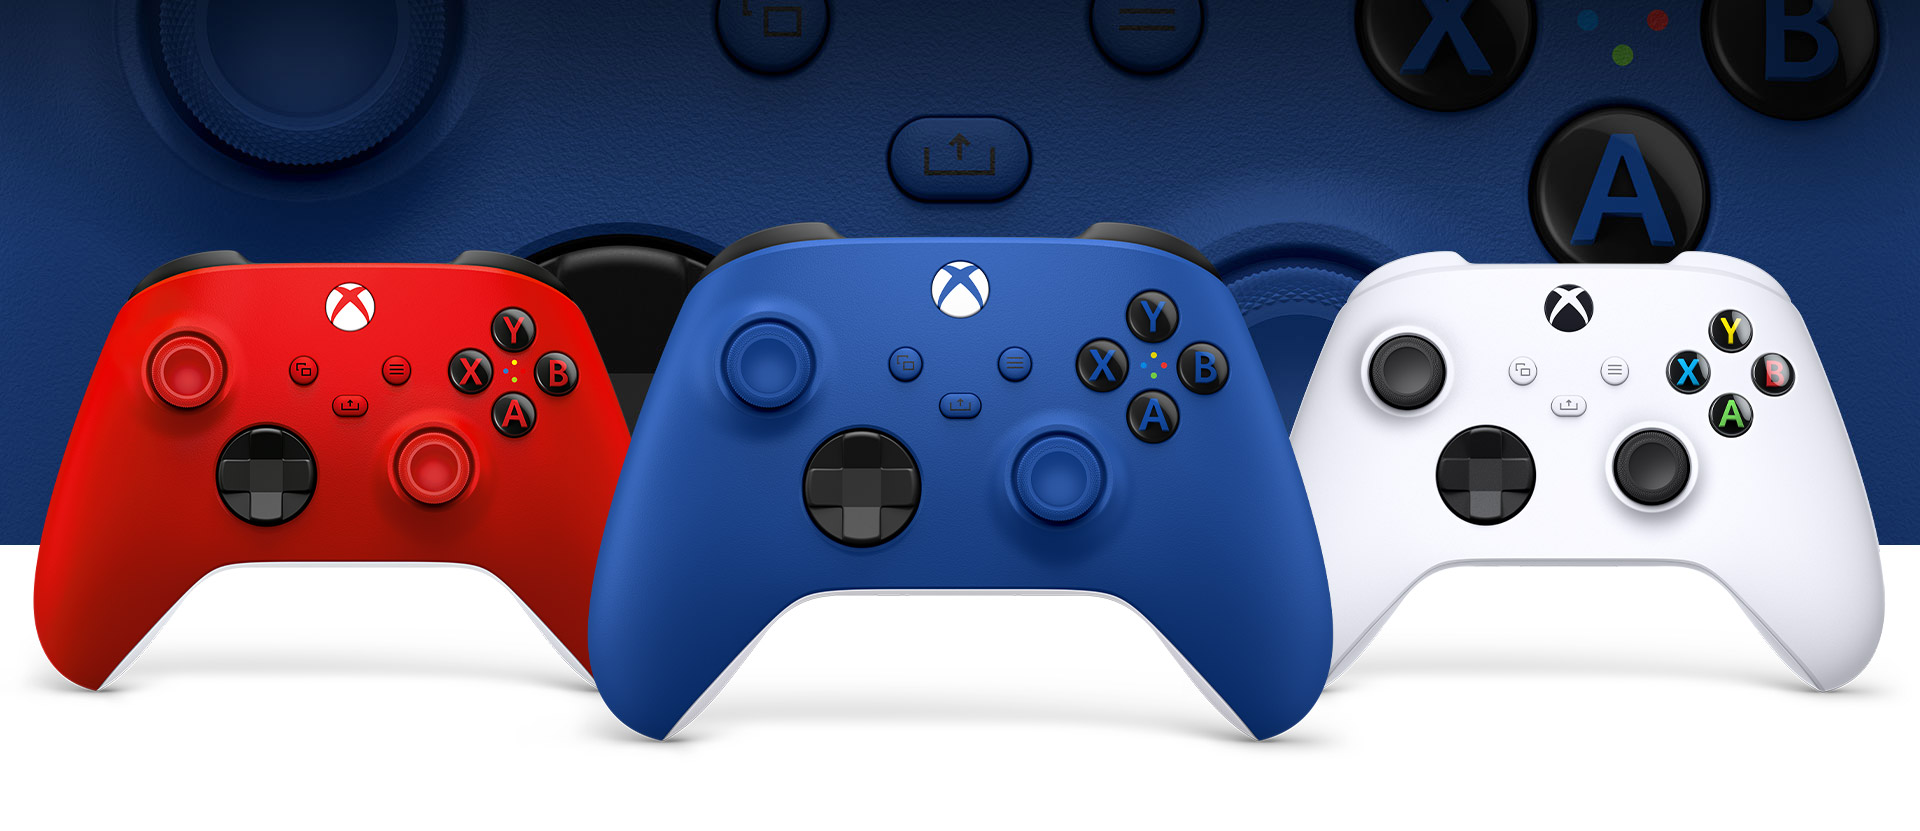 Геймпад Xbox в сине-голубом цвете Shock Blue на переднем плане, на фоне геймпада в белом цвете Robot White и геймпада в красном цвете Pulse Red